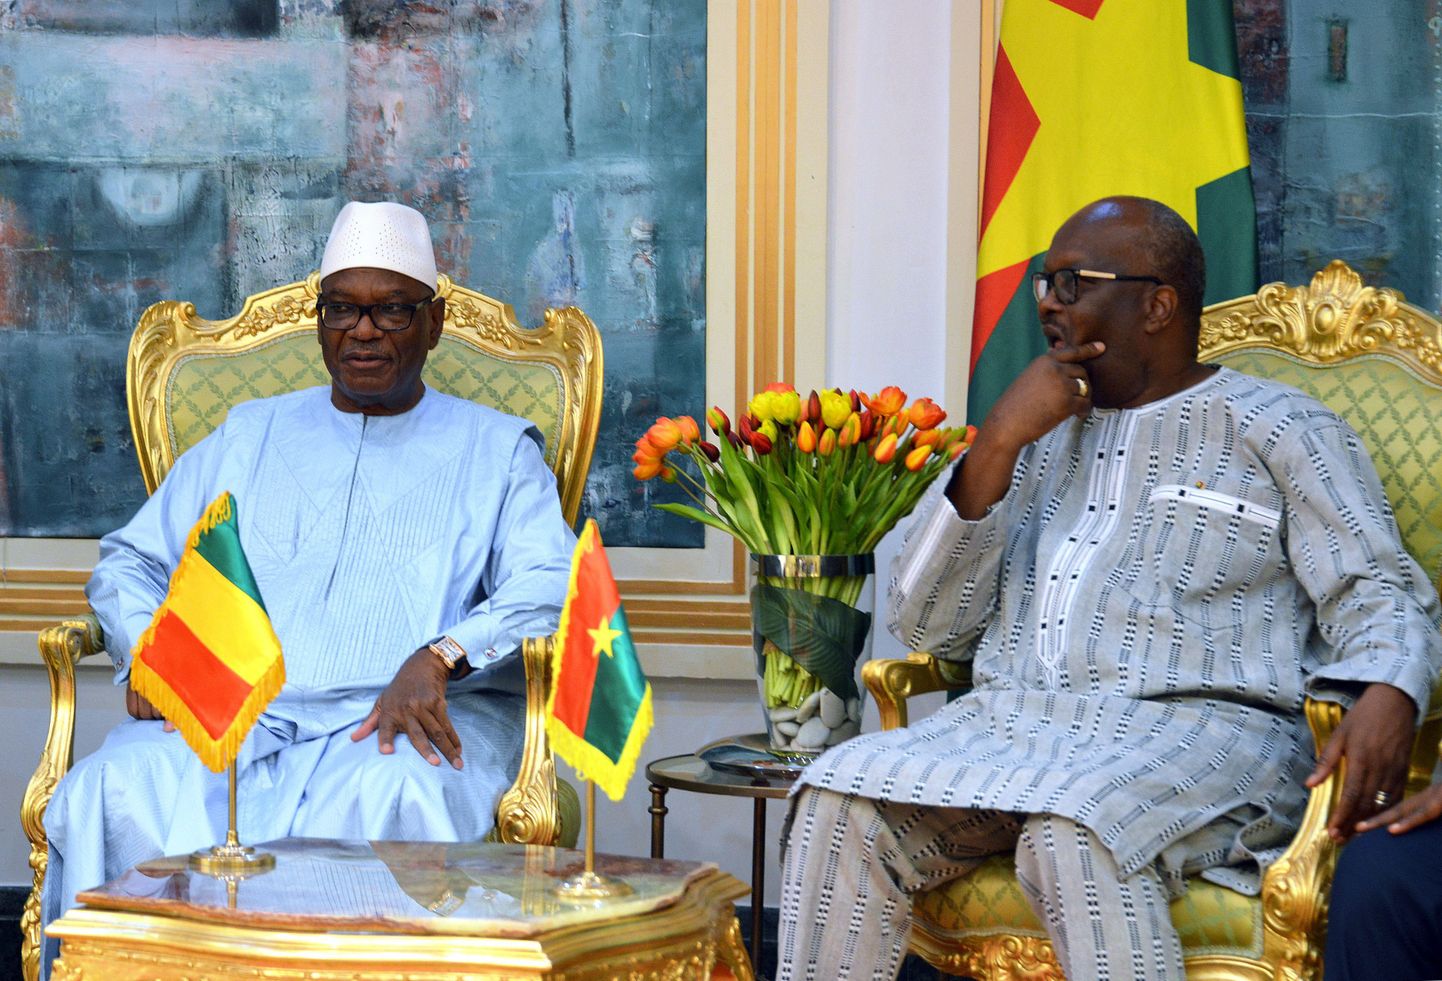 Mali president Ibrahim Boubacar Keita ja Burkina Faso president Roch Marc Christian Kabore.